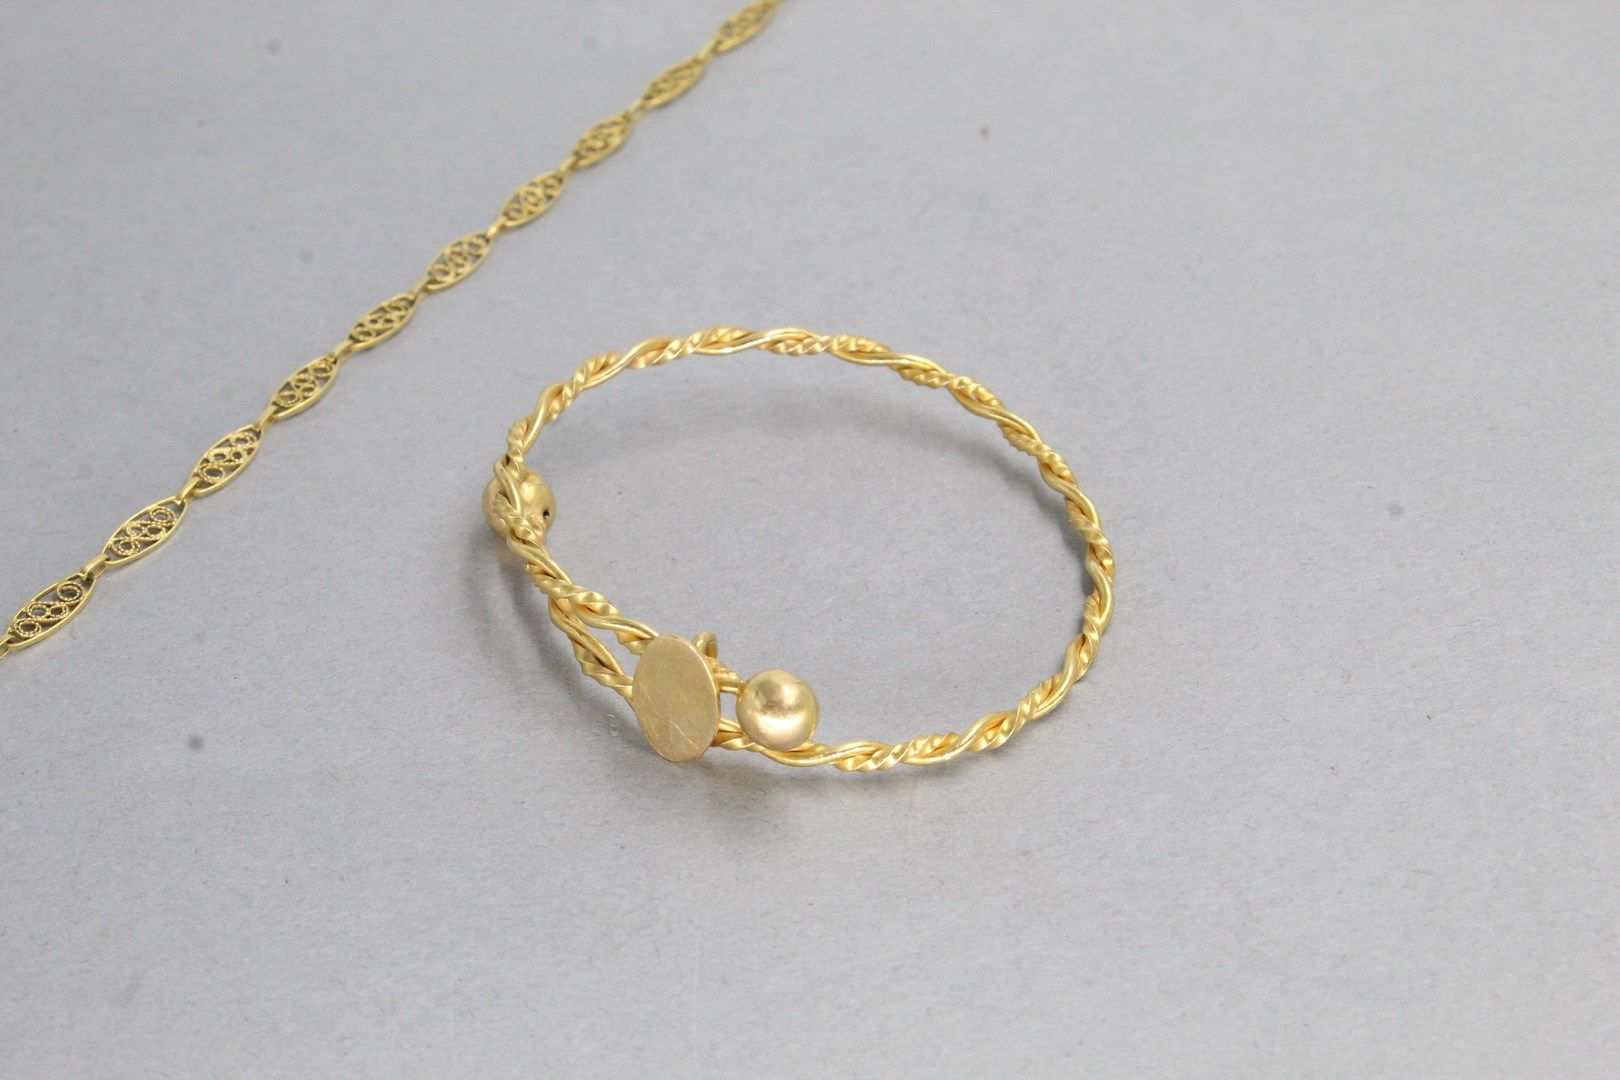 Null 18k (750) gold lot including: 

- A rigid twisted bracelet

- A bracelet wi&hellip;